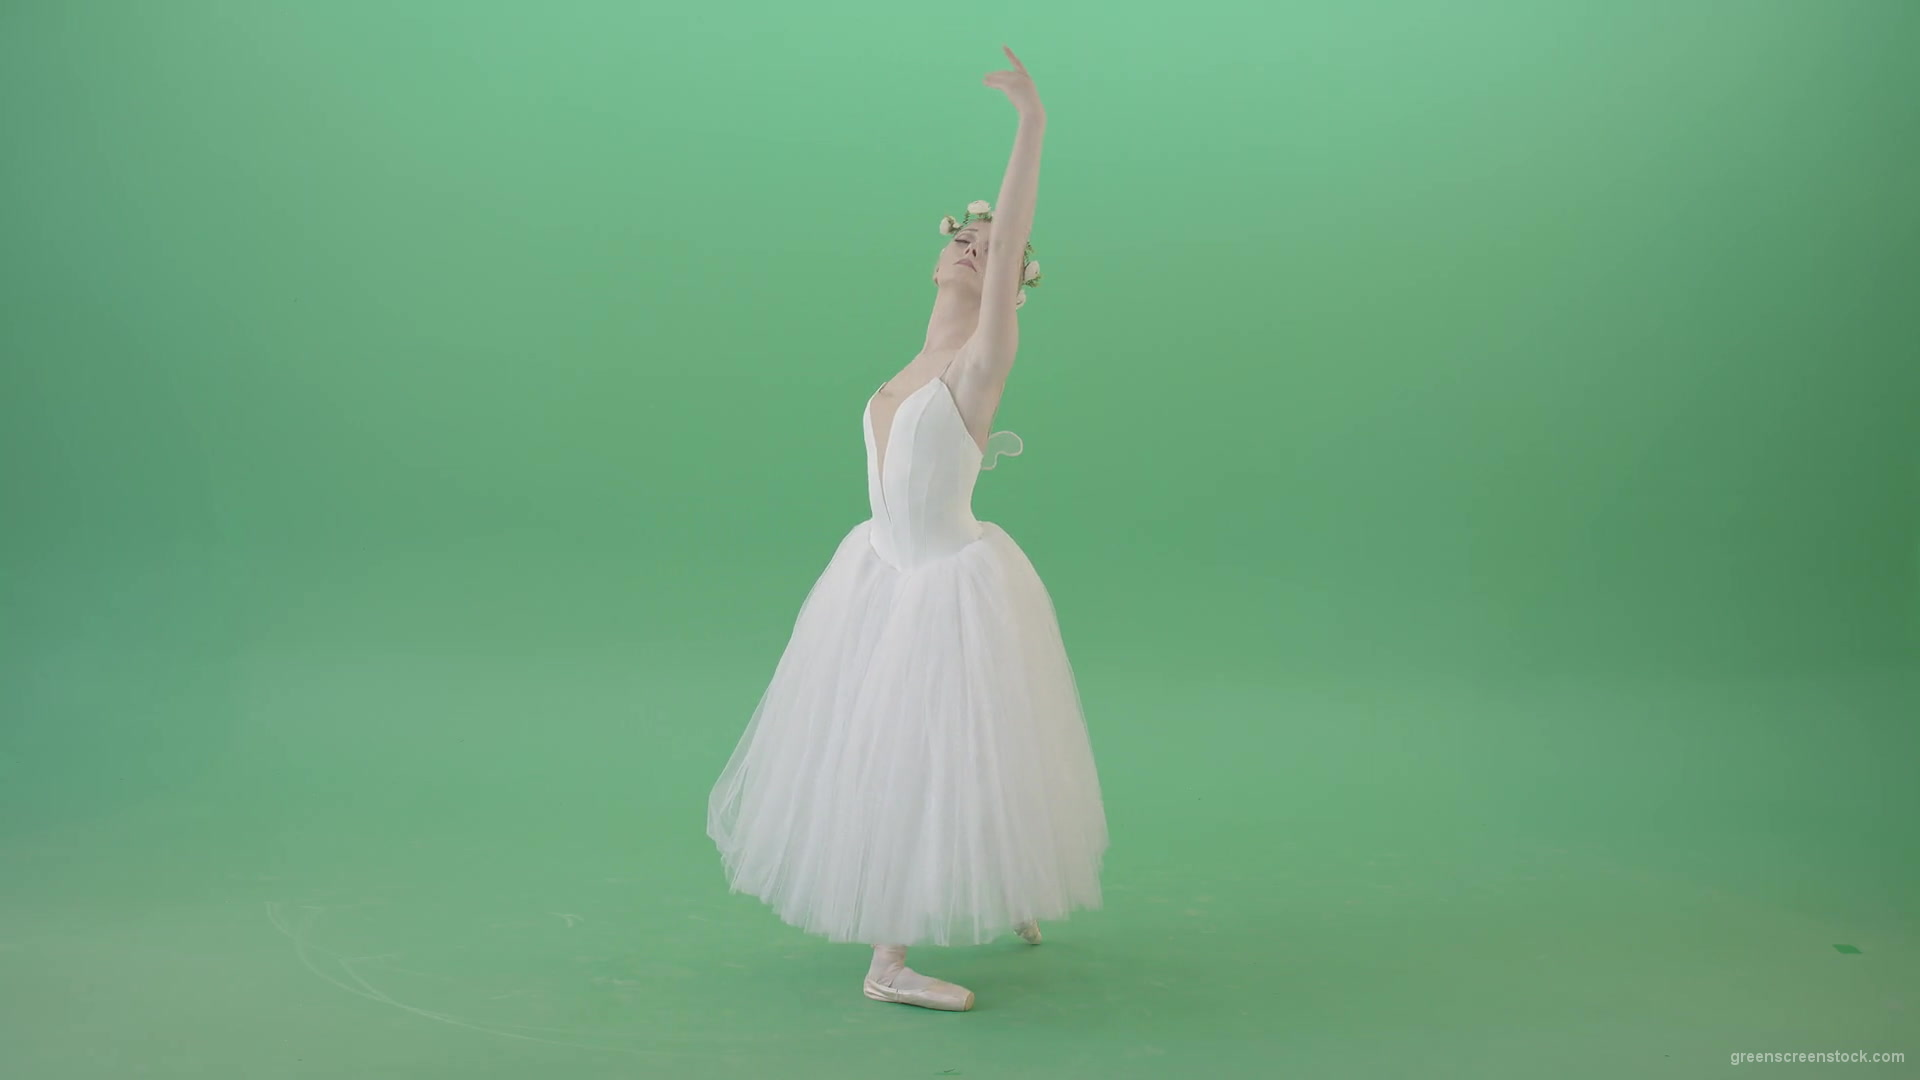 Royal-elegant-greetings-regards-by-Ballet-Dancer-Girl-in-White-Dress-on-Green-Screen-4K-Video-Clip-1920_007 Green Screen Stock